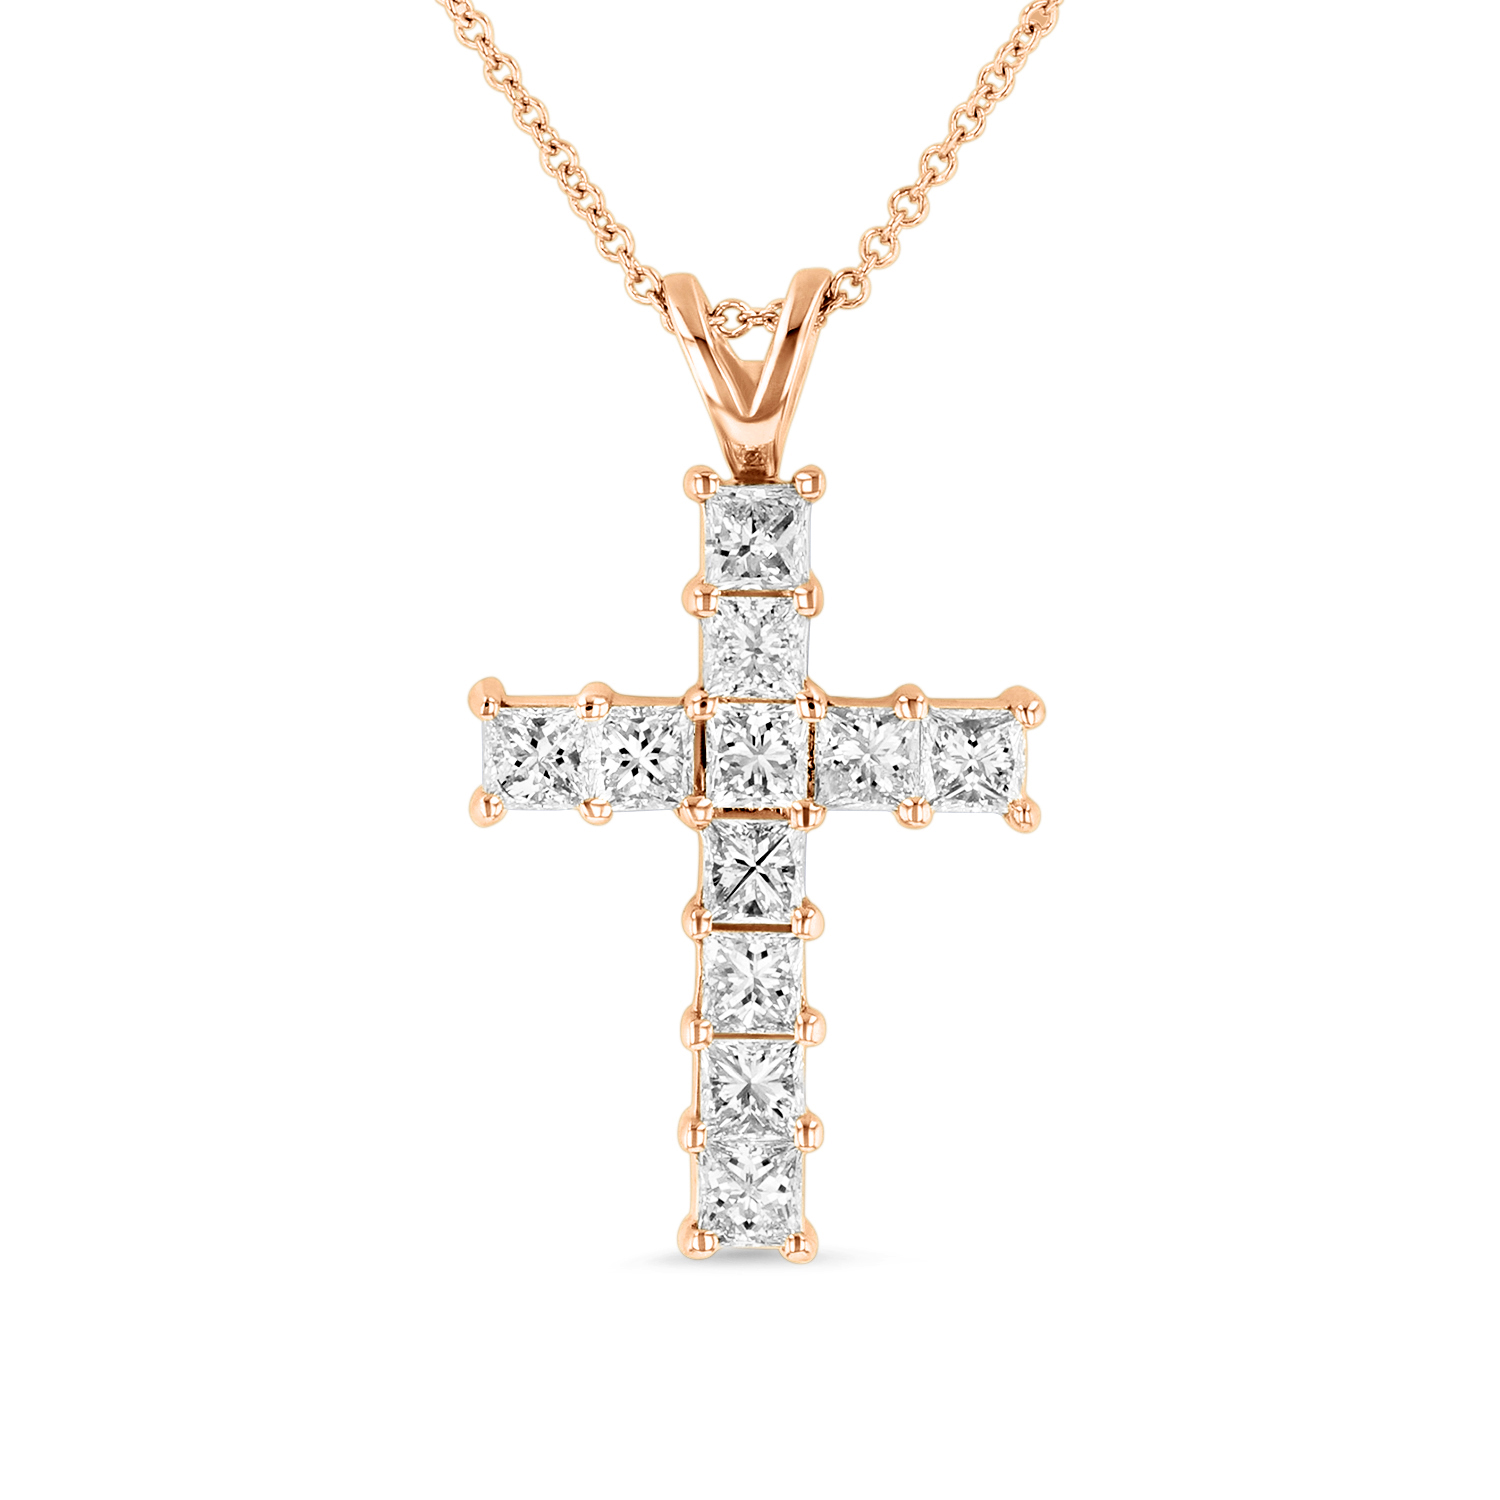 View 1.50ctw Diamond Cross Pendant in 14k Rose Gold